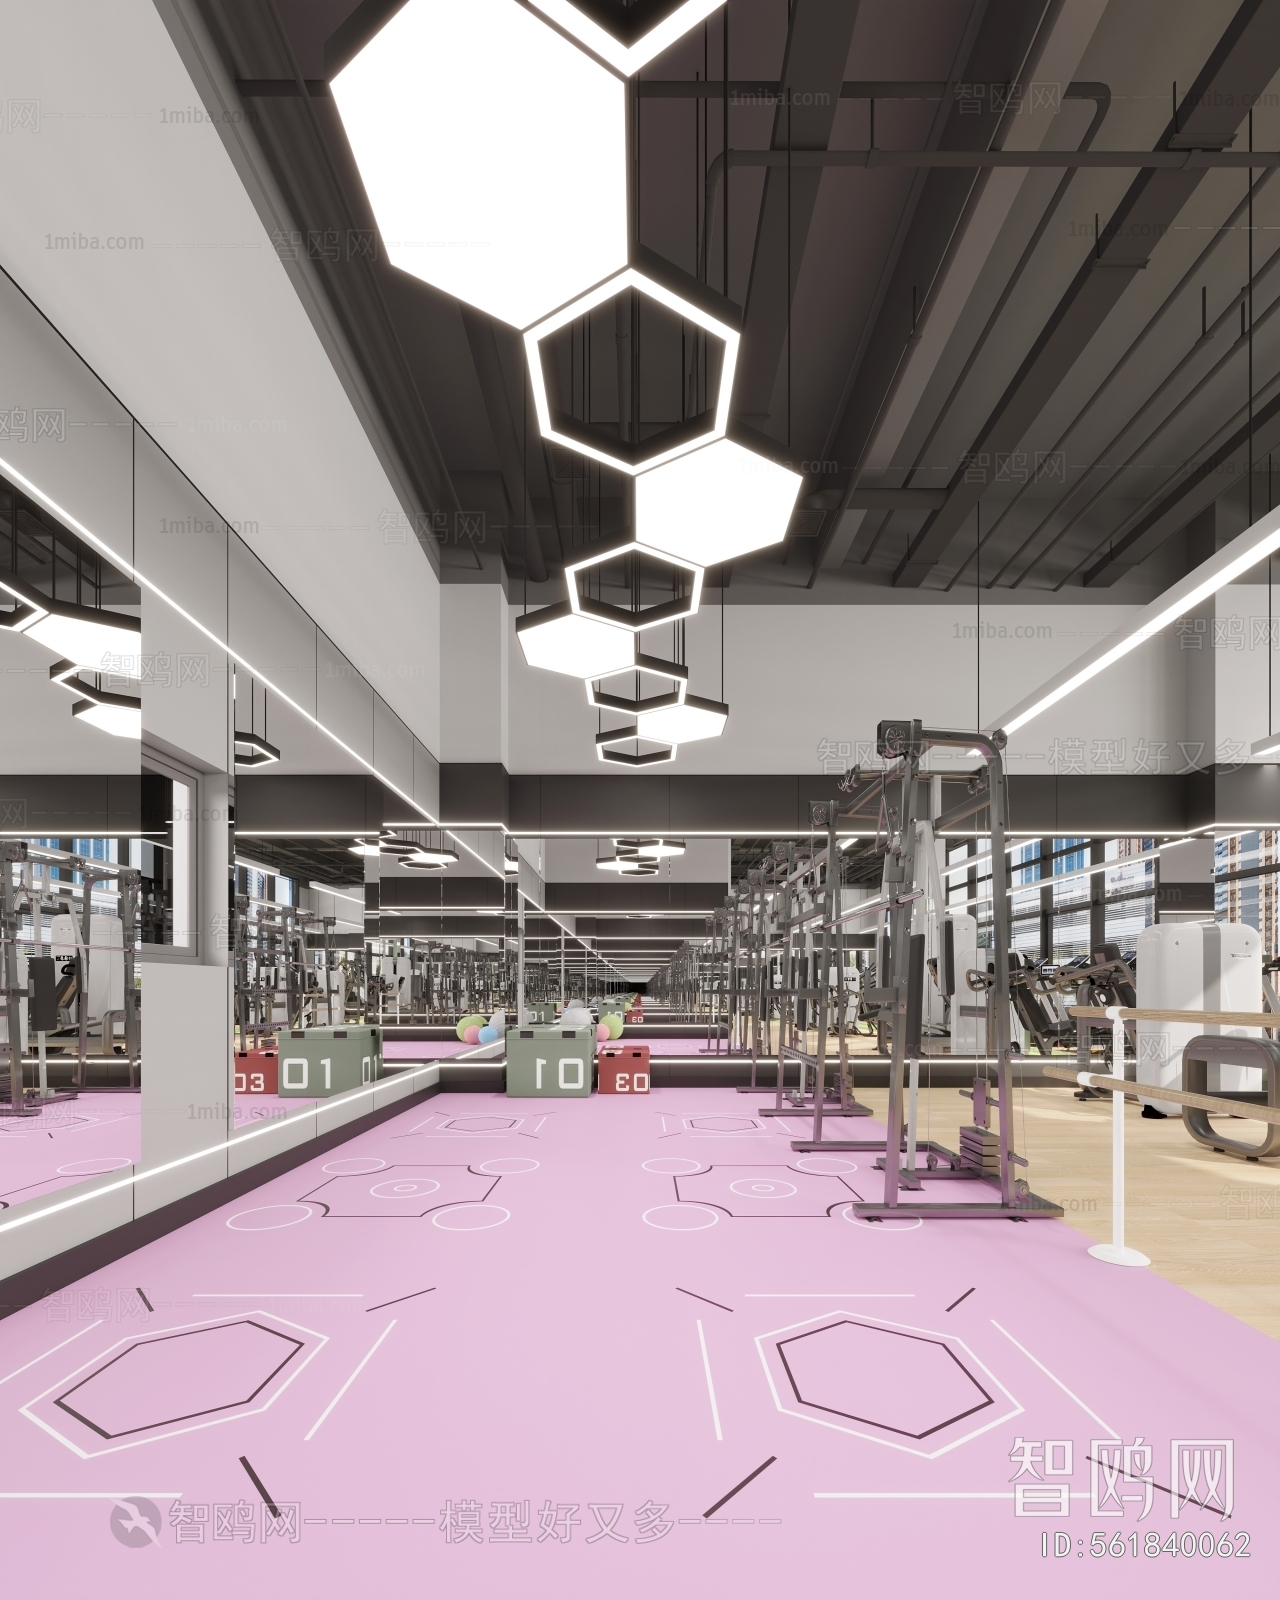 Modern Industrial Style Gym